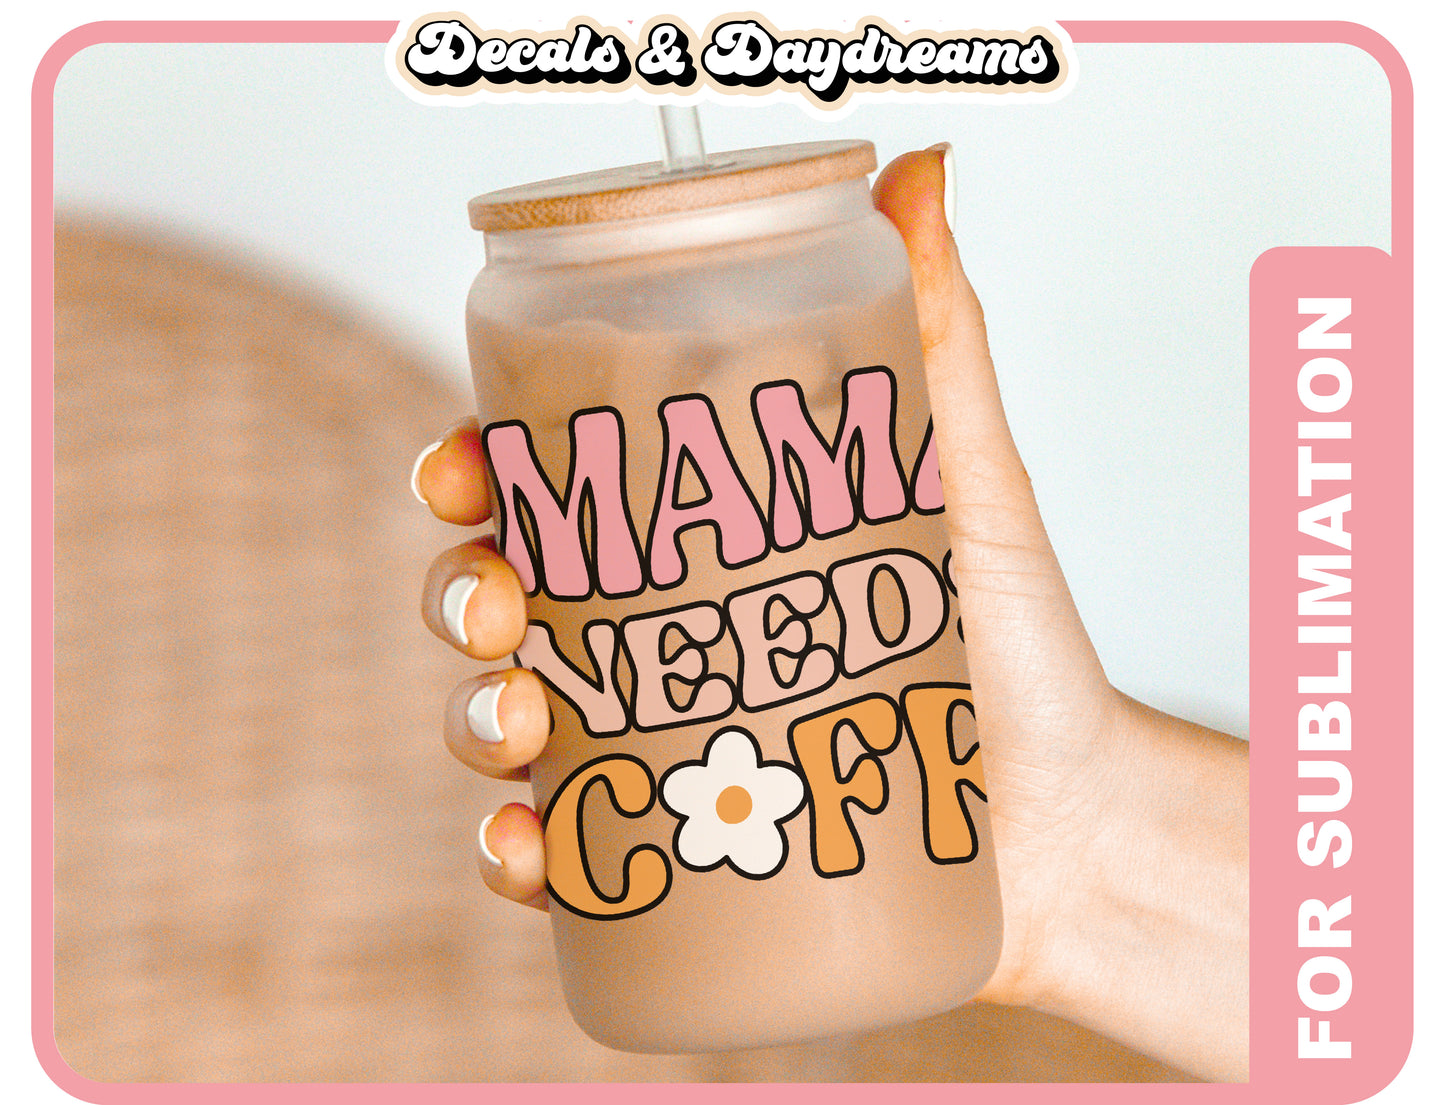 Retro Coffee Mom SVG  Bundle